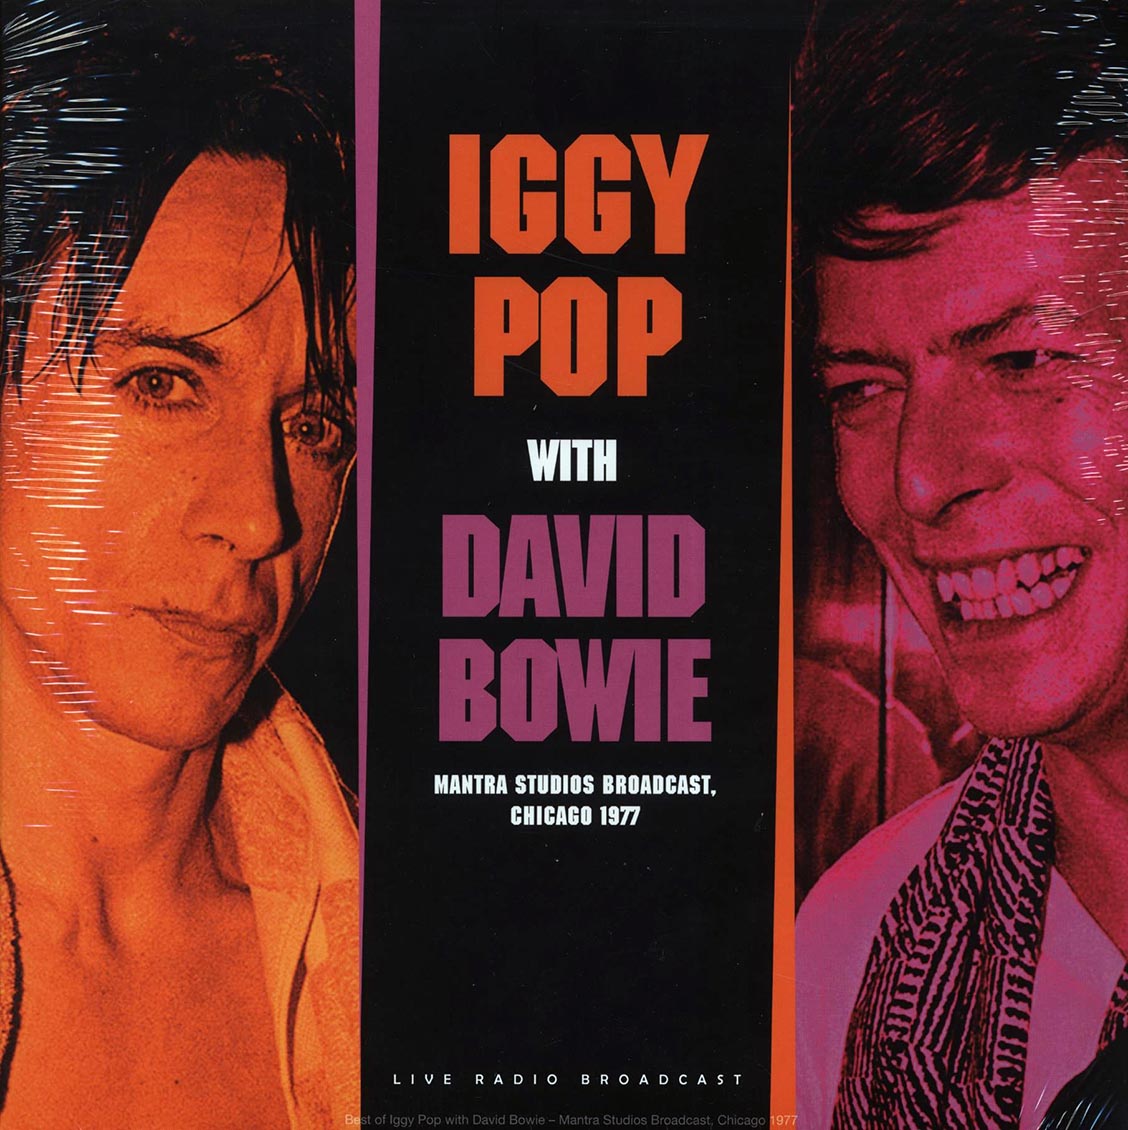 Iggy Pop, David Bowie - Mantra Studios Broadcast, Chicago 1977